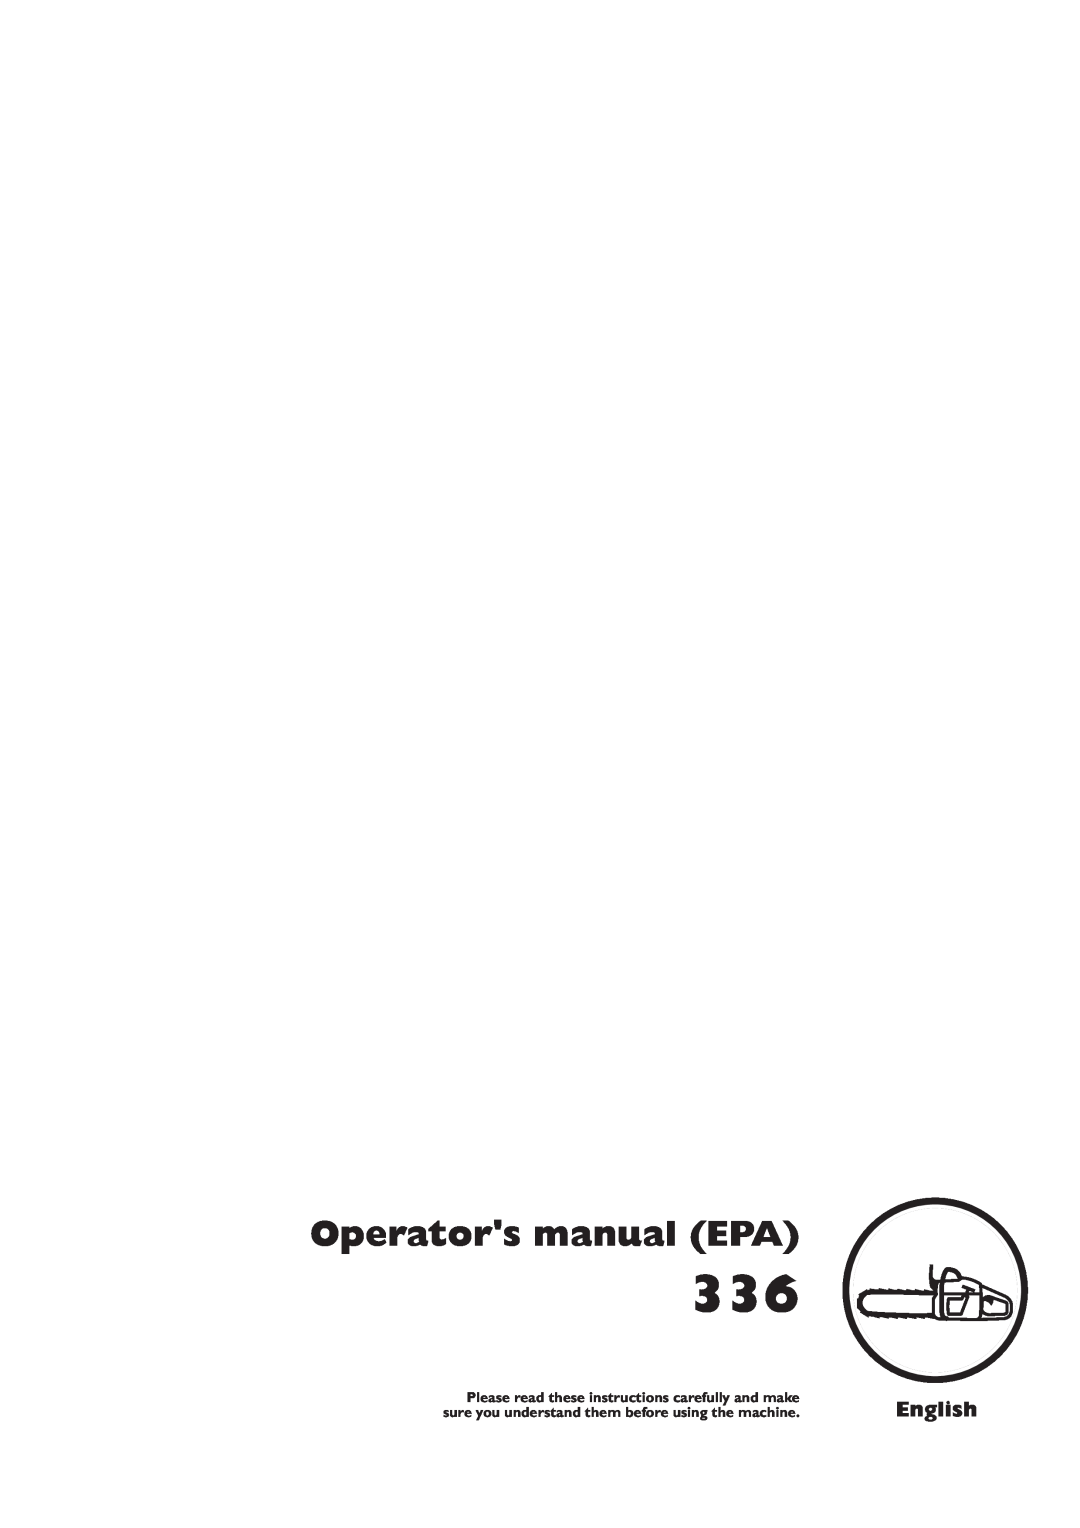 Husqvarna 339XP manual English, Operators manual EPA 